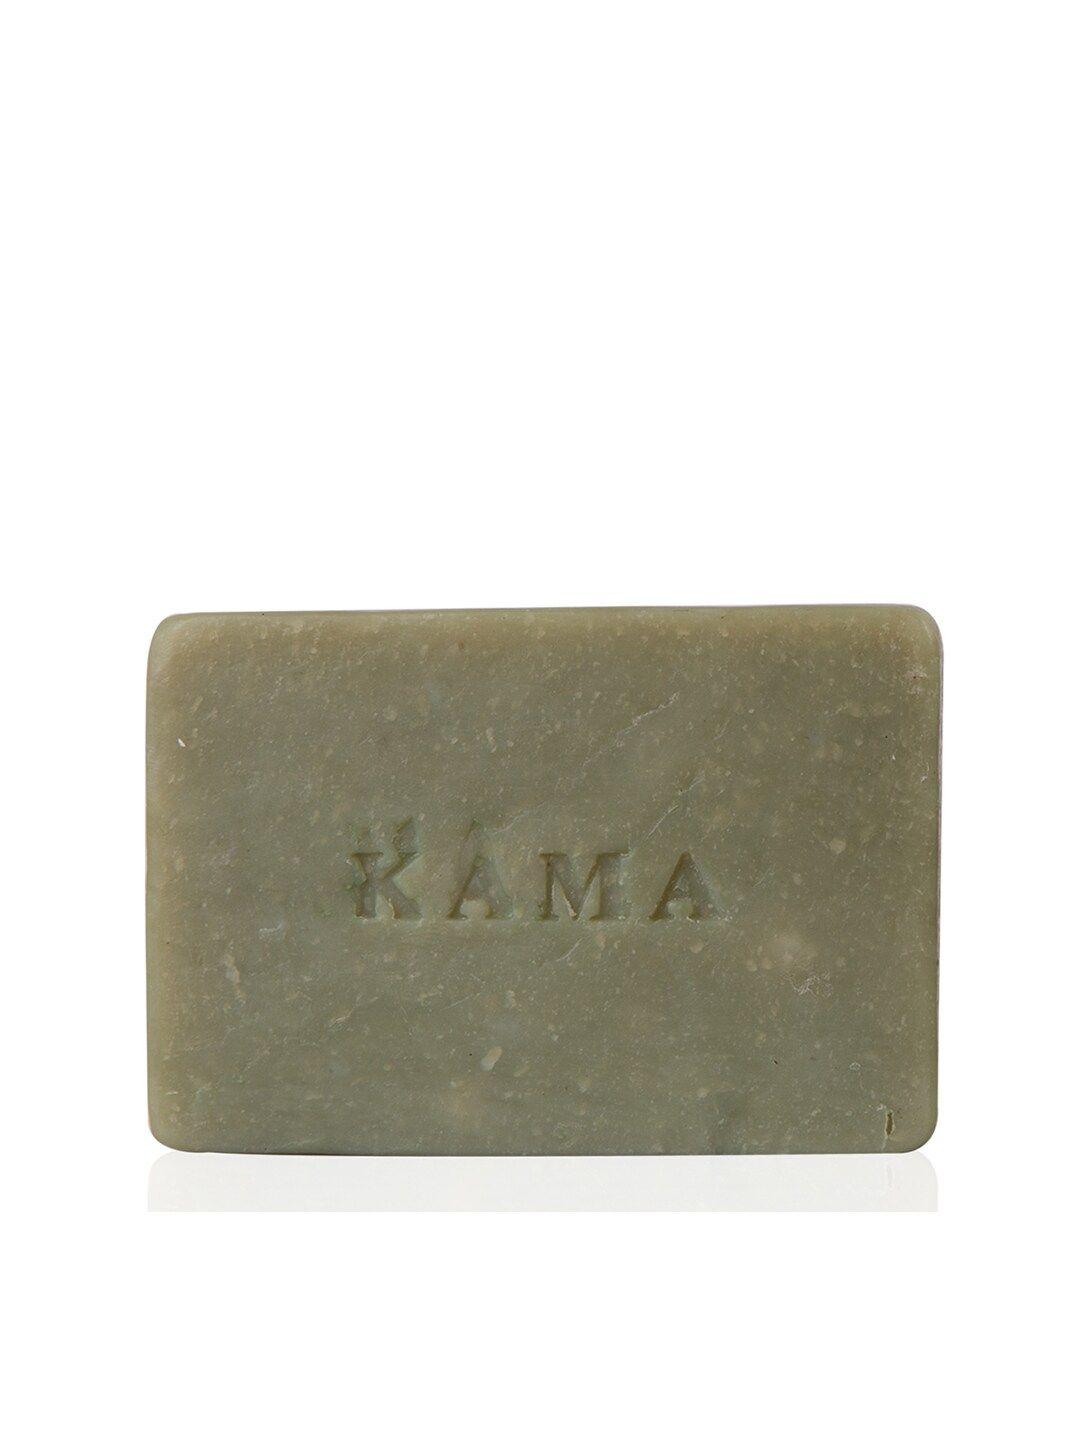 kama ayurveda sustainable khus natural soap 125 g